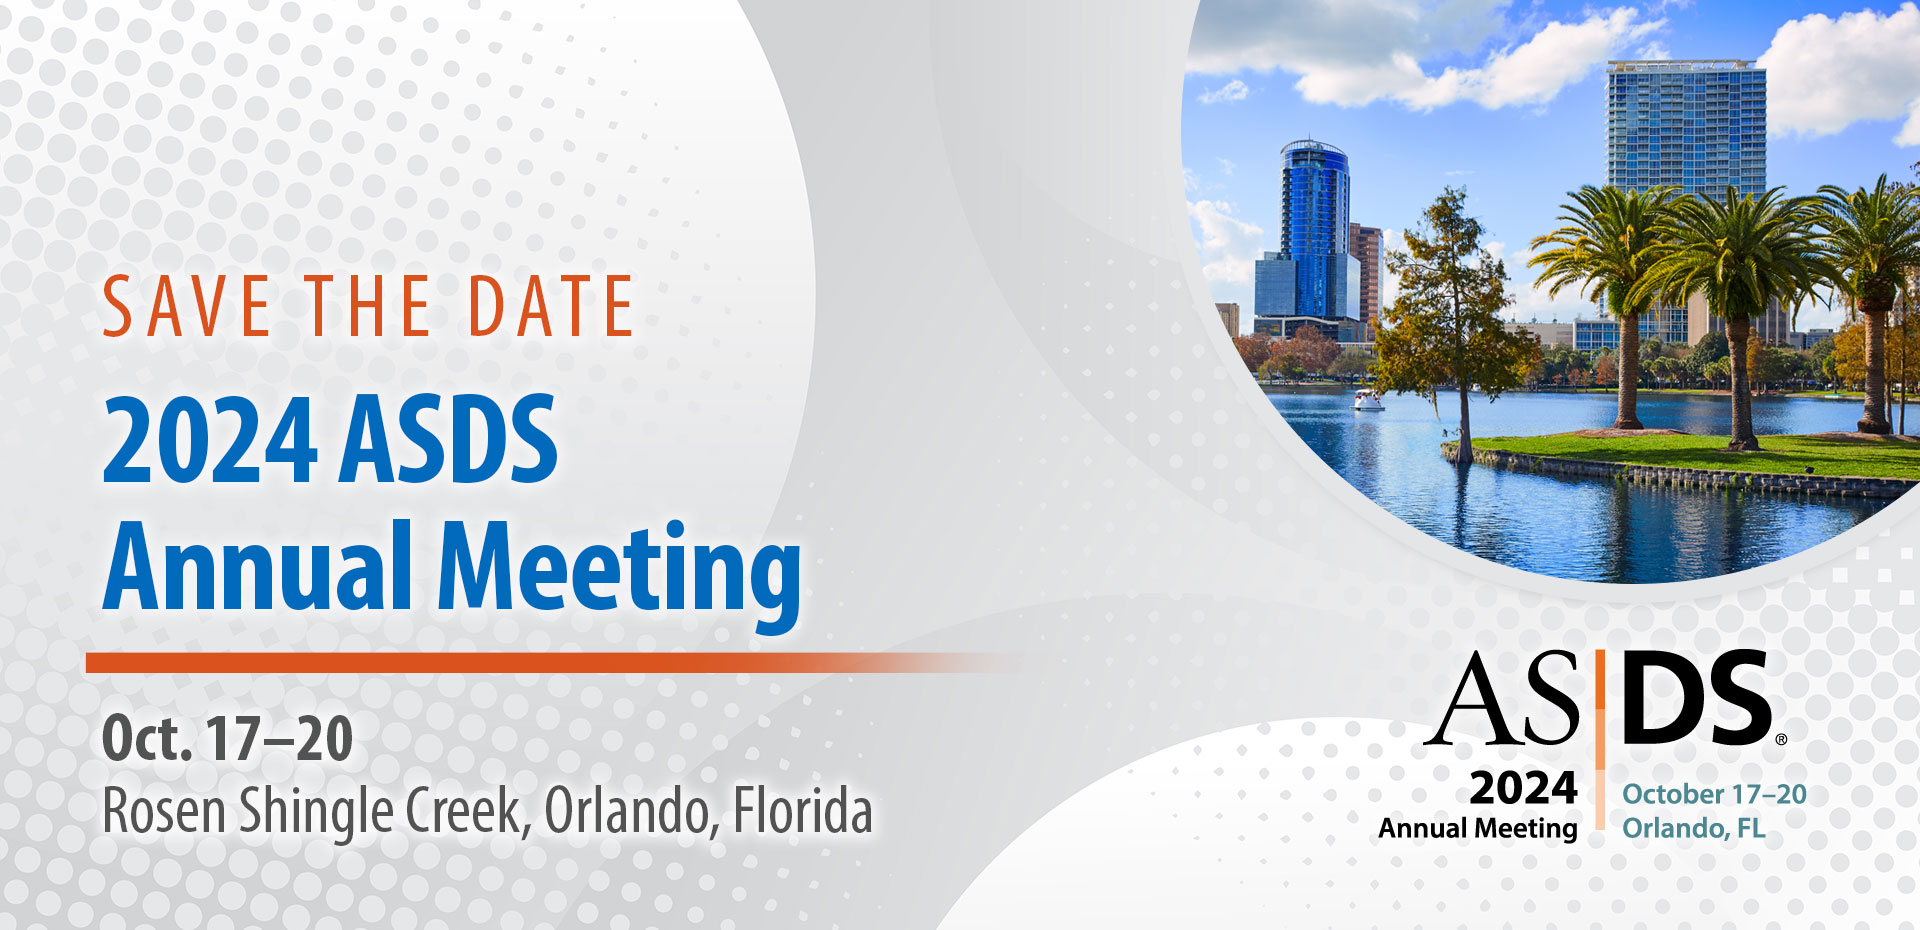 ASDS Annual Meeting Oct. 1720, 2024 Orlando